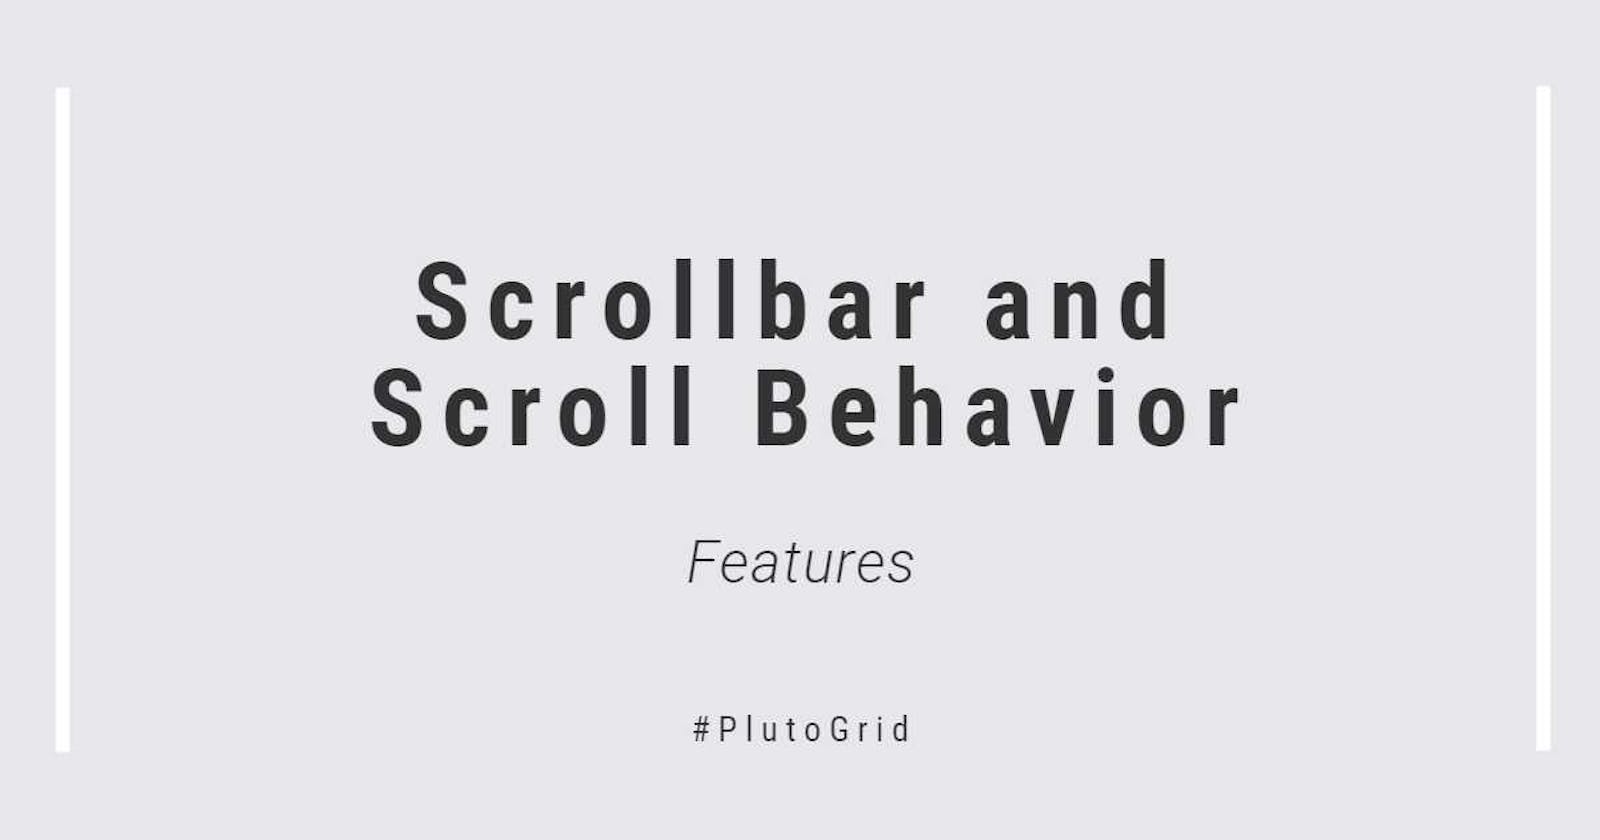 Scrollbar and Scroll Behavior